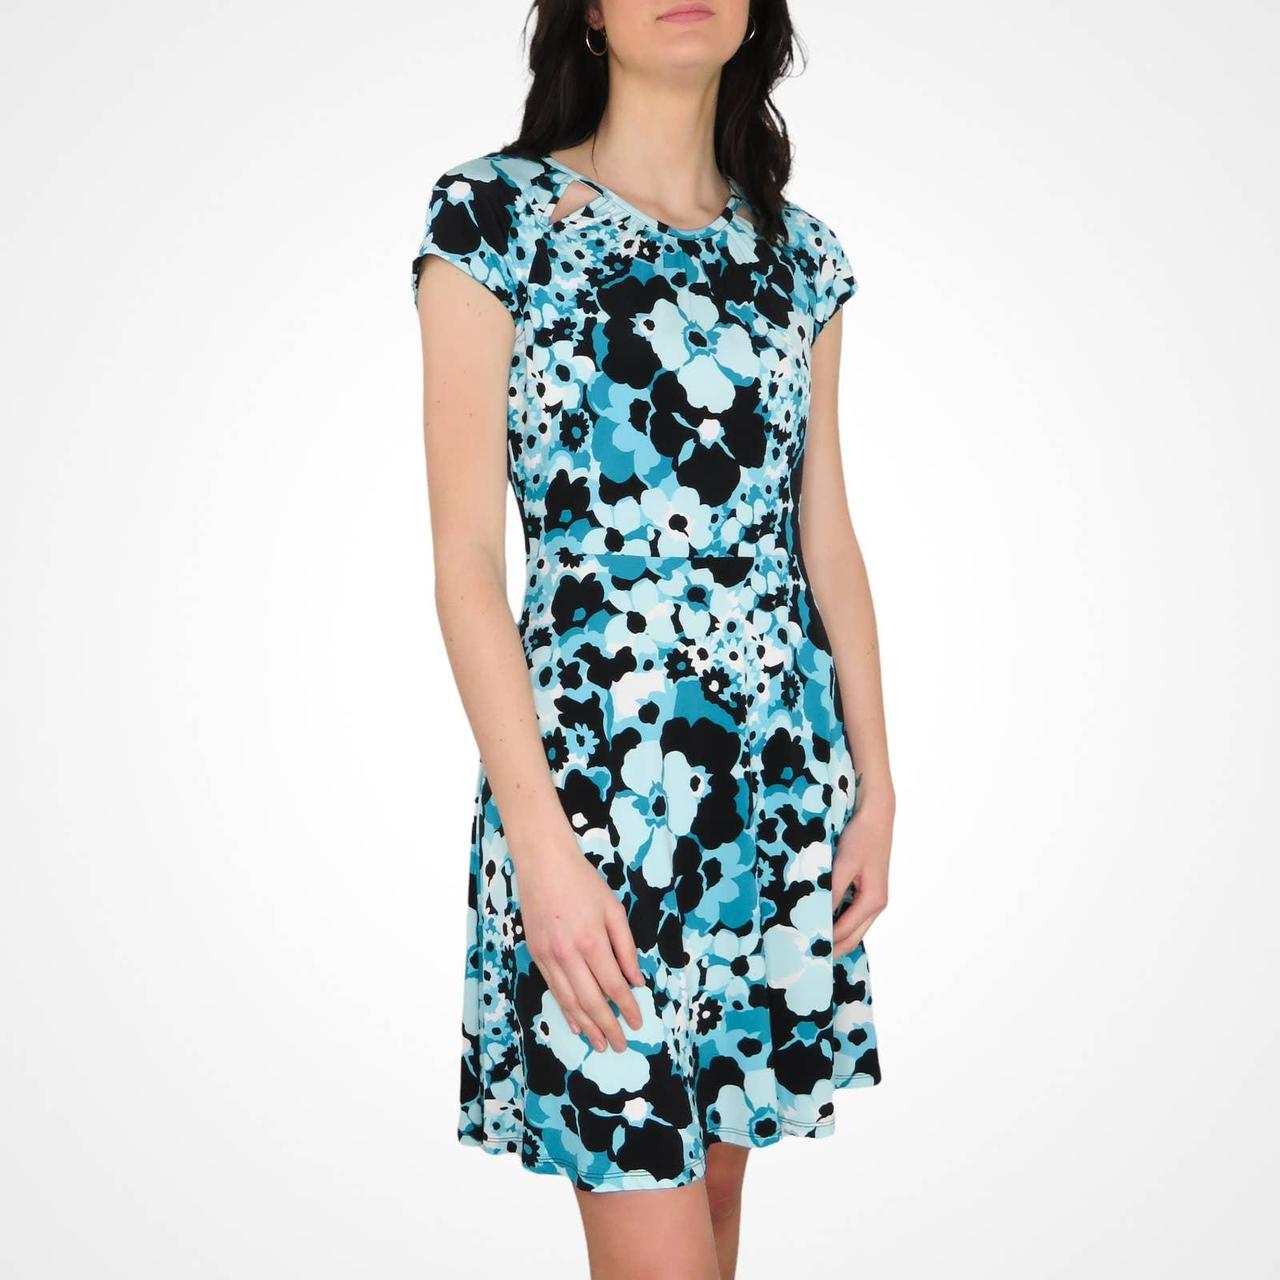 Michael Kors Women's Blue and White Dress | Depop